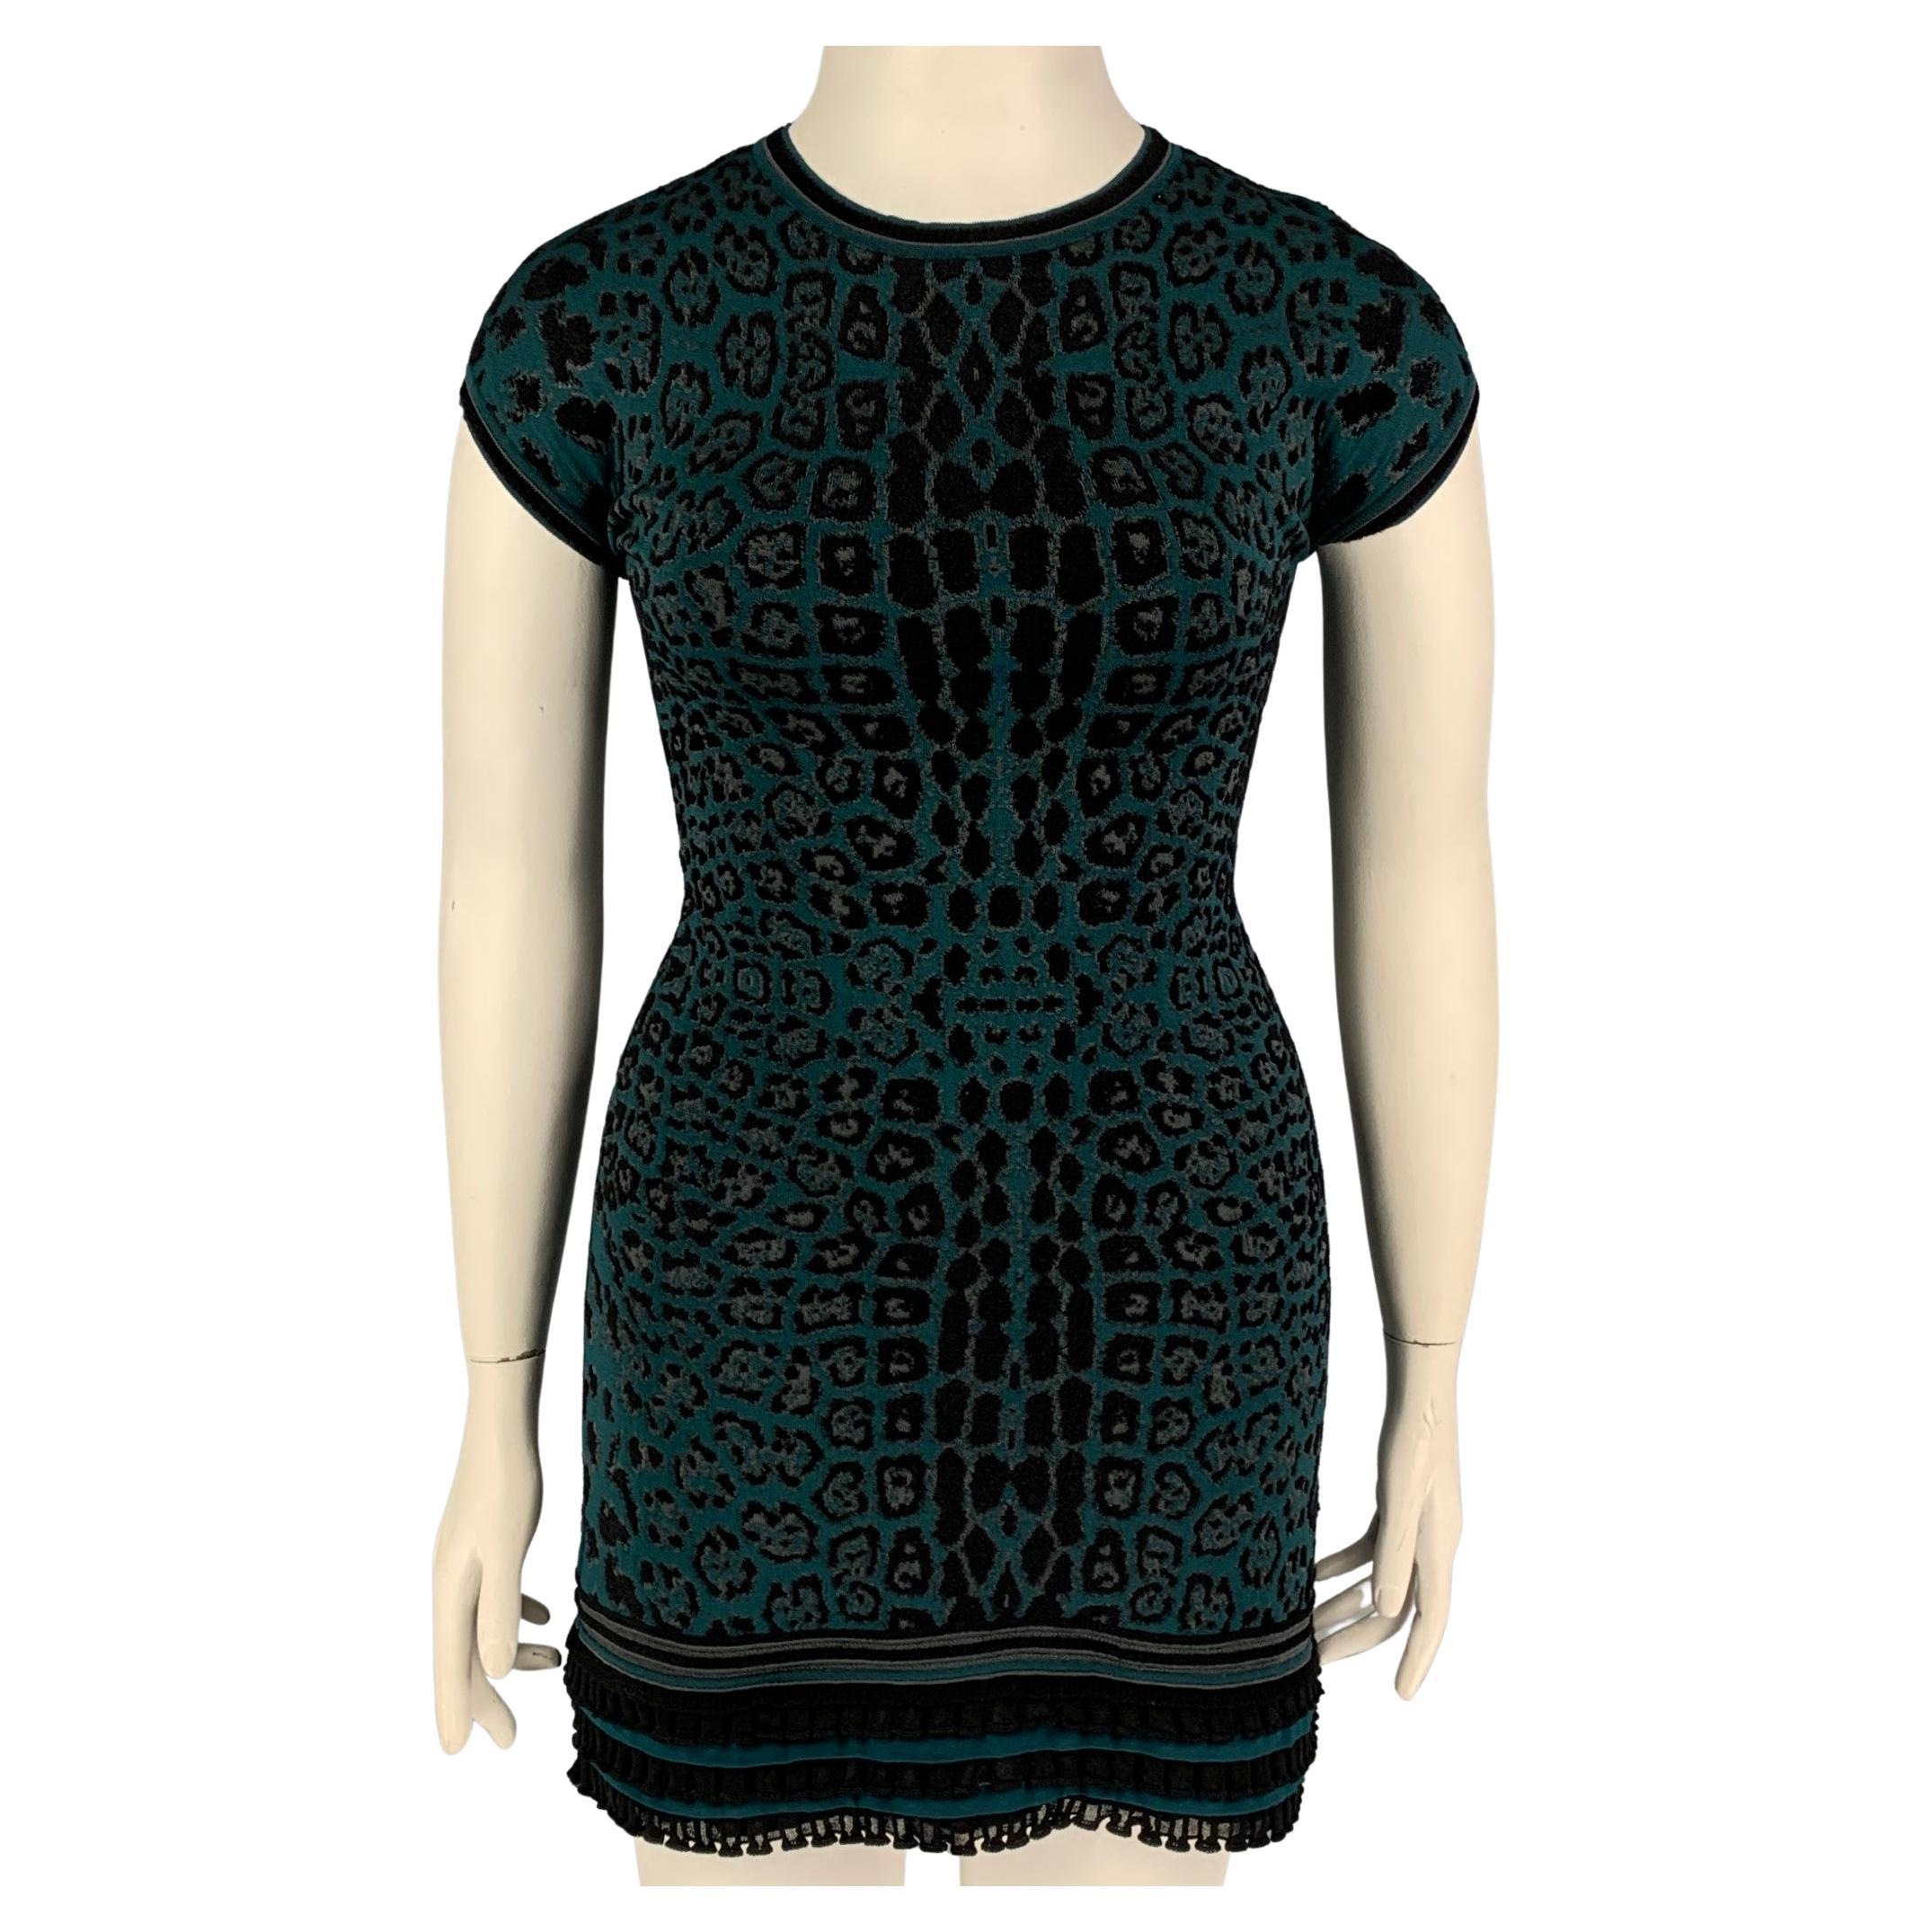 ROBERTO CAVALLI Size 8 Black Green Animal Print Viscose Blend Dress